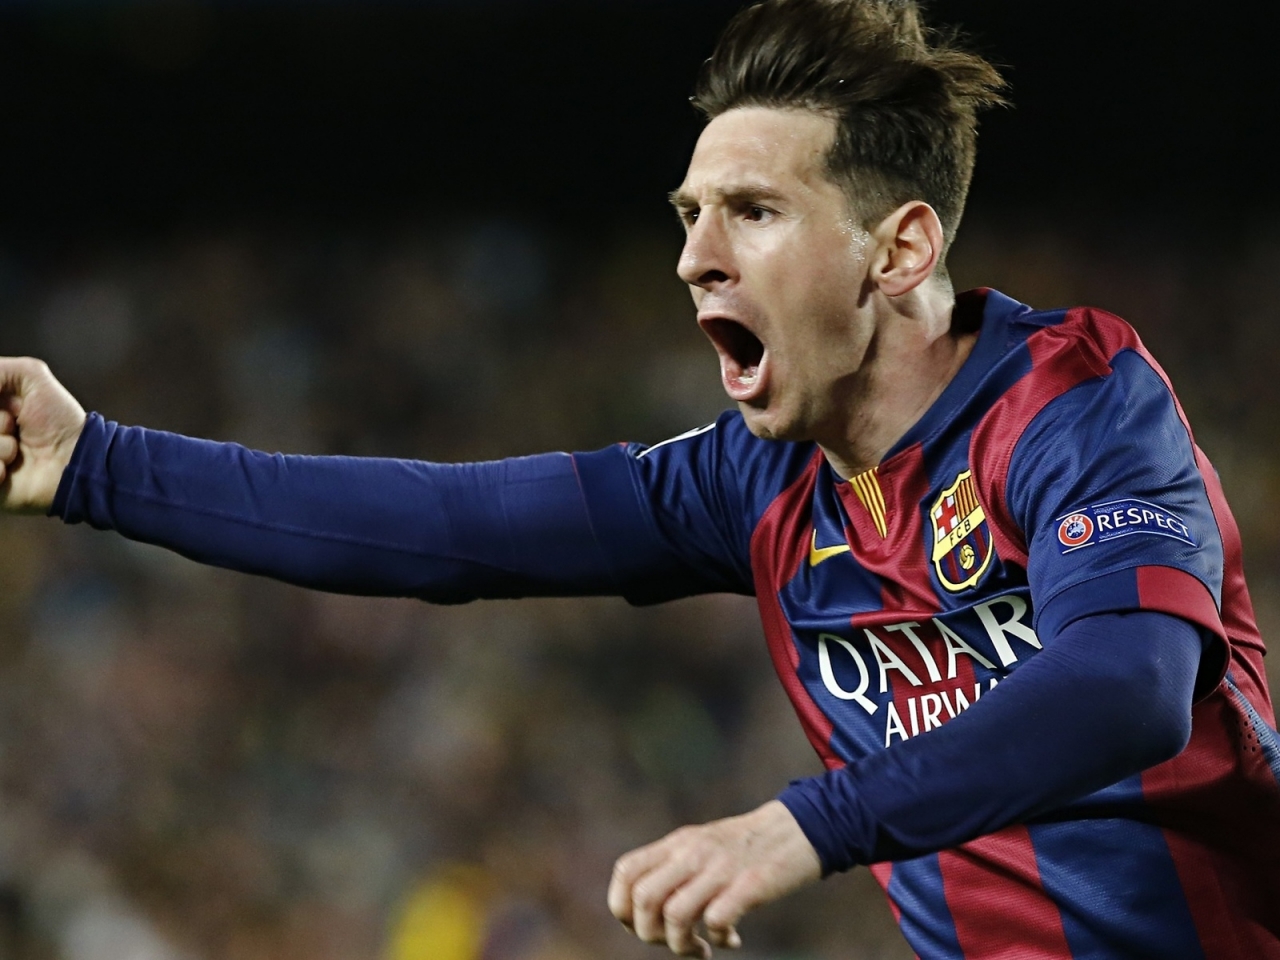 Lionel Messi Celebrating for 1280 x 960 resolution